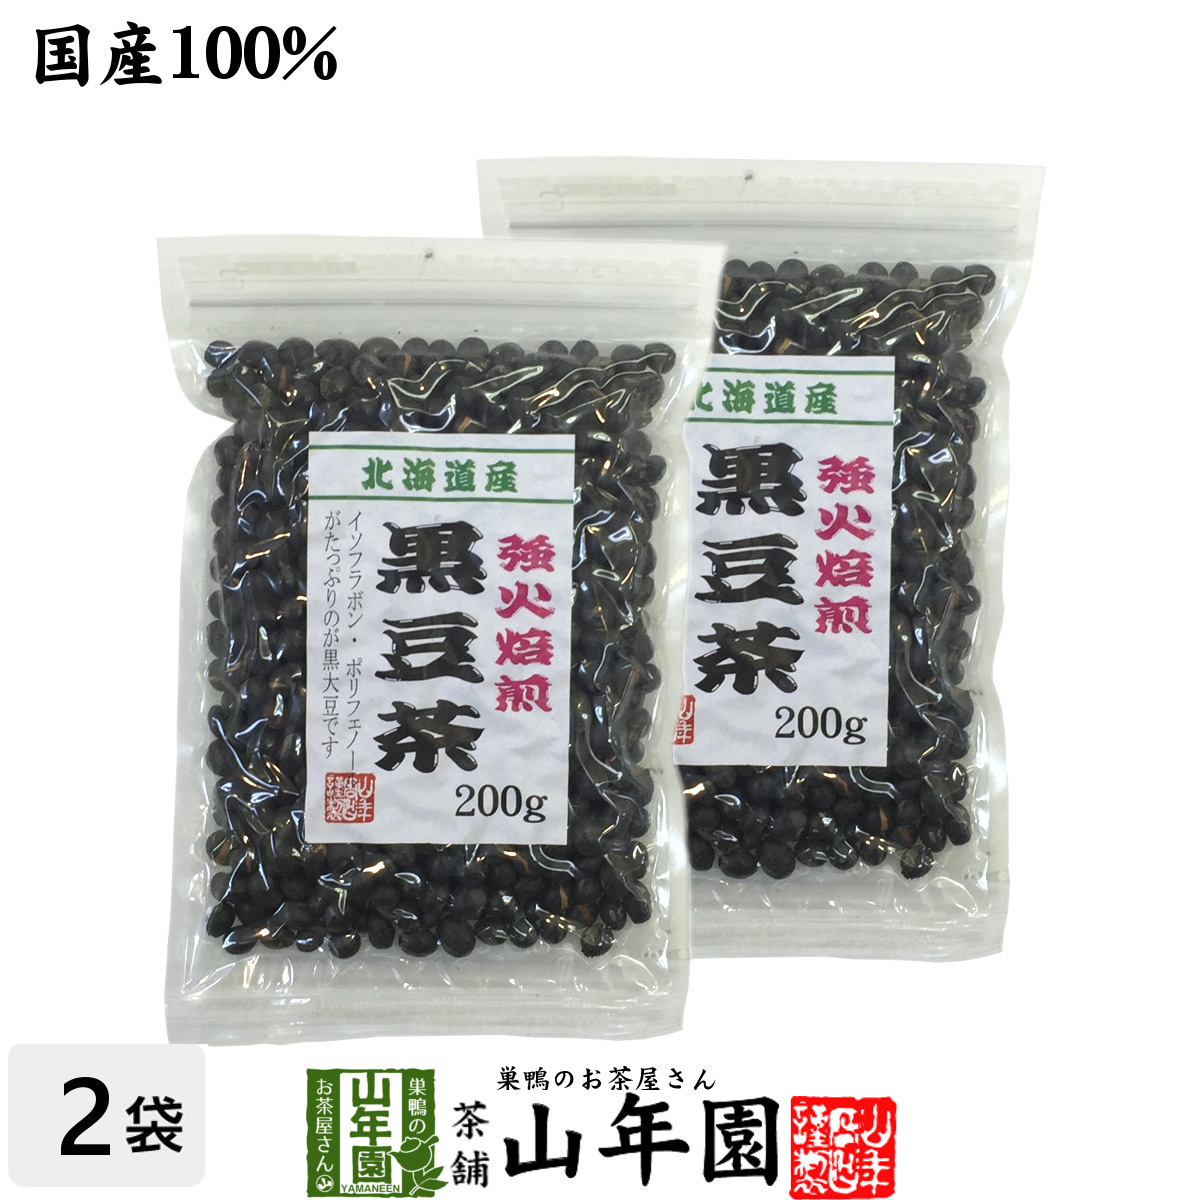  health tea black soybean tea large grain Hokkaido production 200g×2 sack set domestic production diet nature food free shipping 